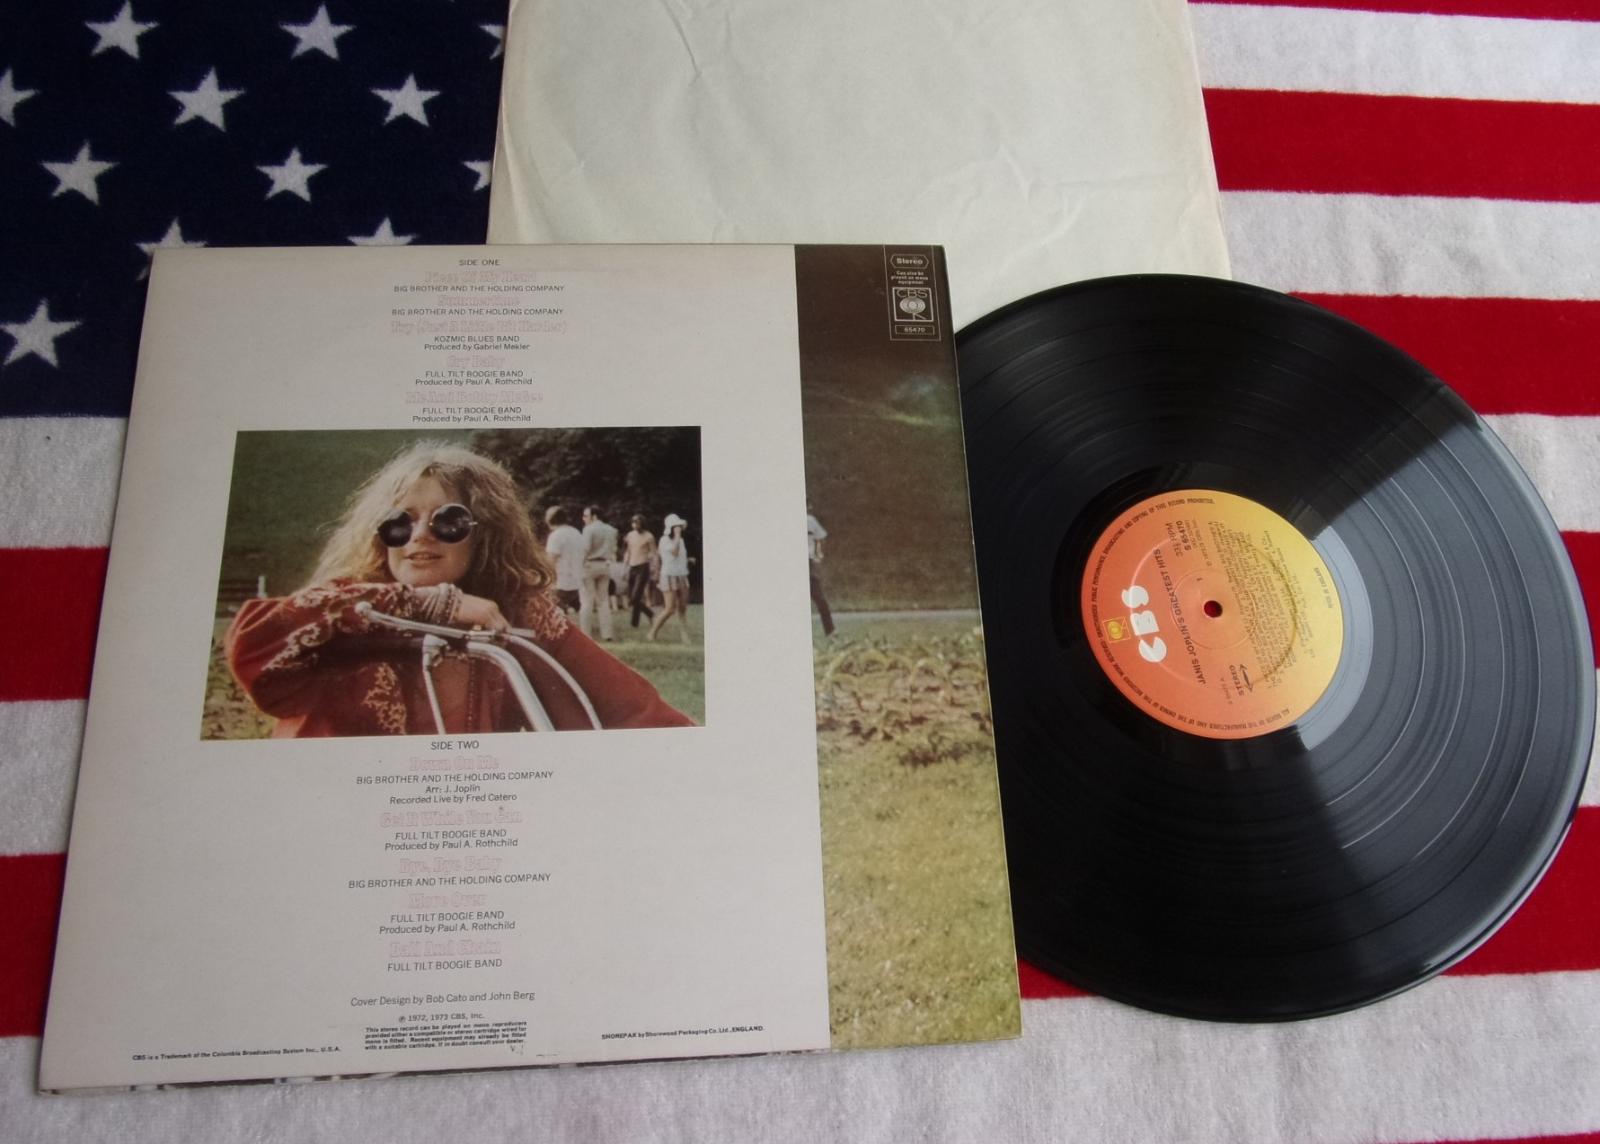 ⚠️ LP: JANIS JOPLIN - GREATEST HITS, Original England pressing 1972/3 - LP / Vinylové desky